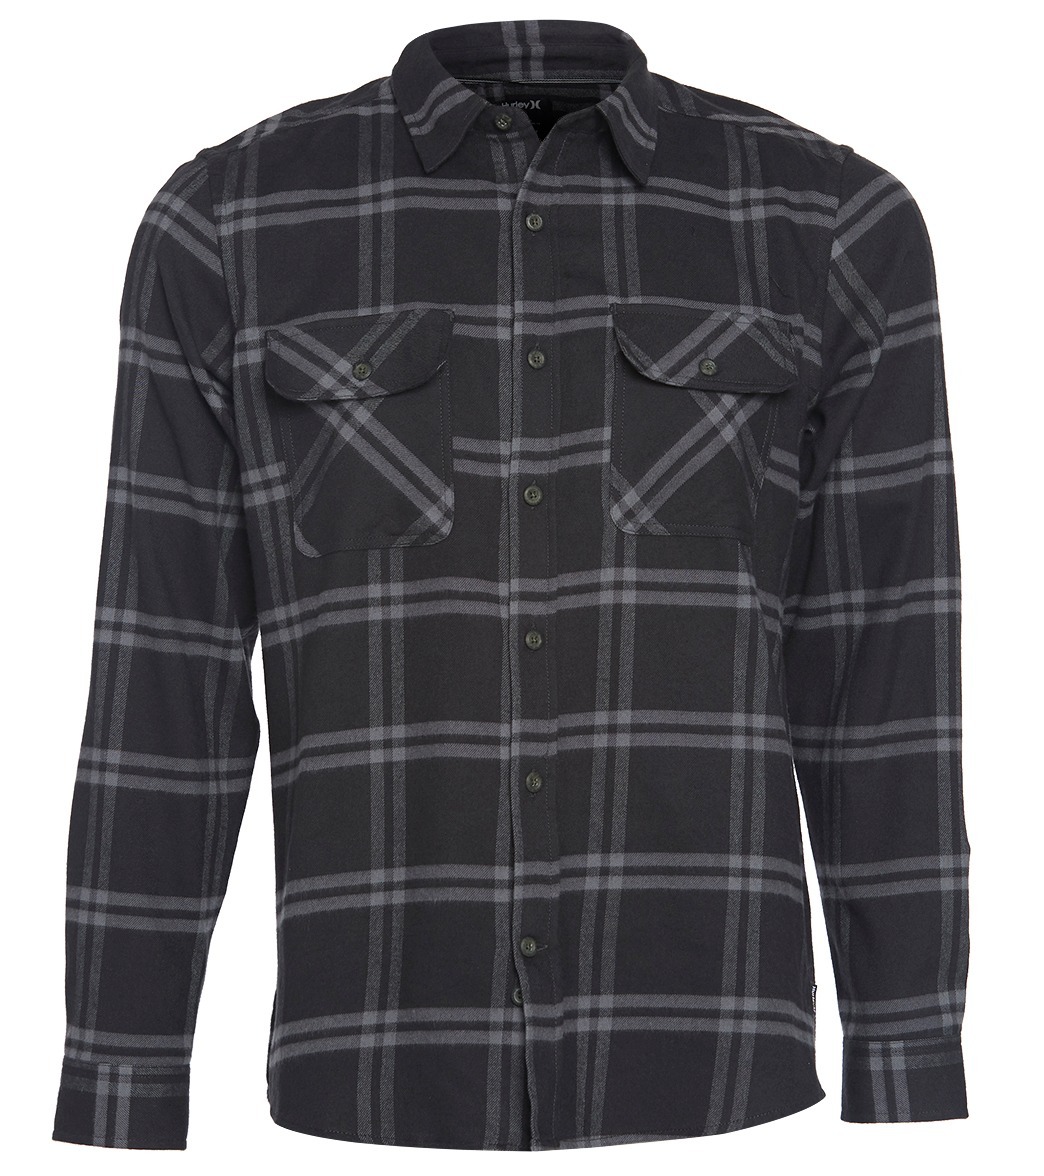 Hurley Dri Fit Salinger Long Sleeve Shirt - Black Small Cotton/Polyester - Swimoutlet.com